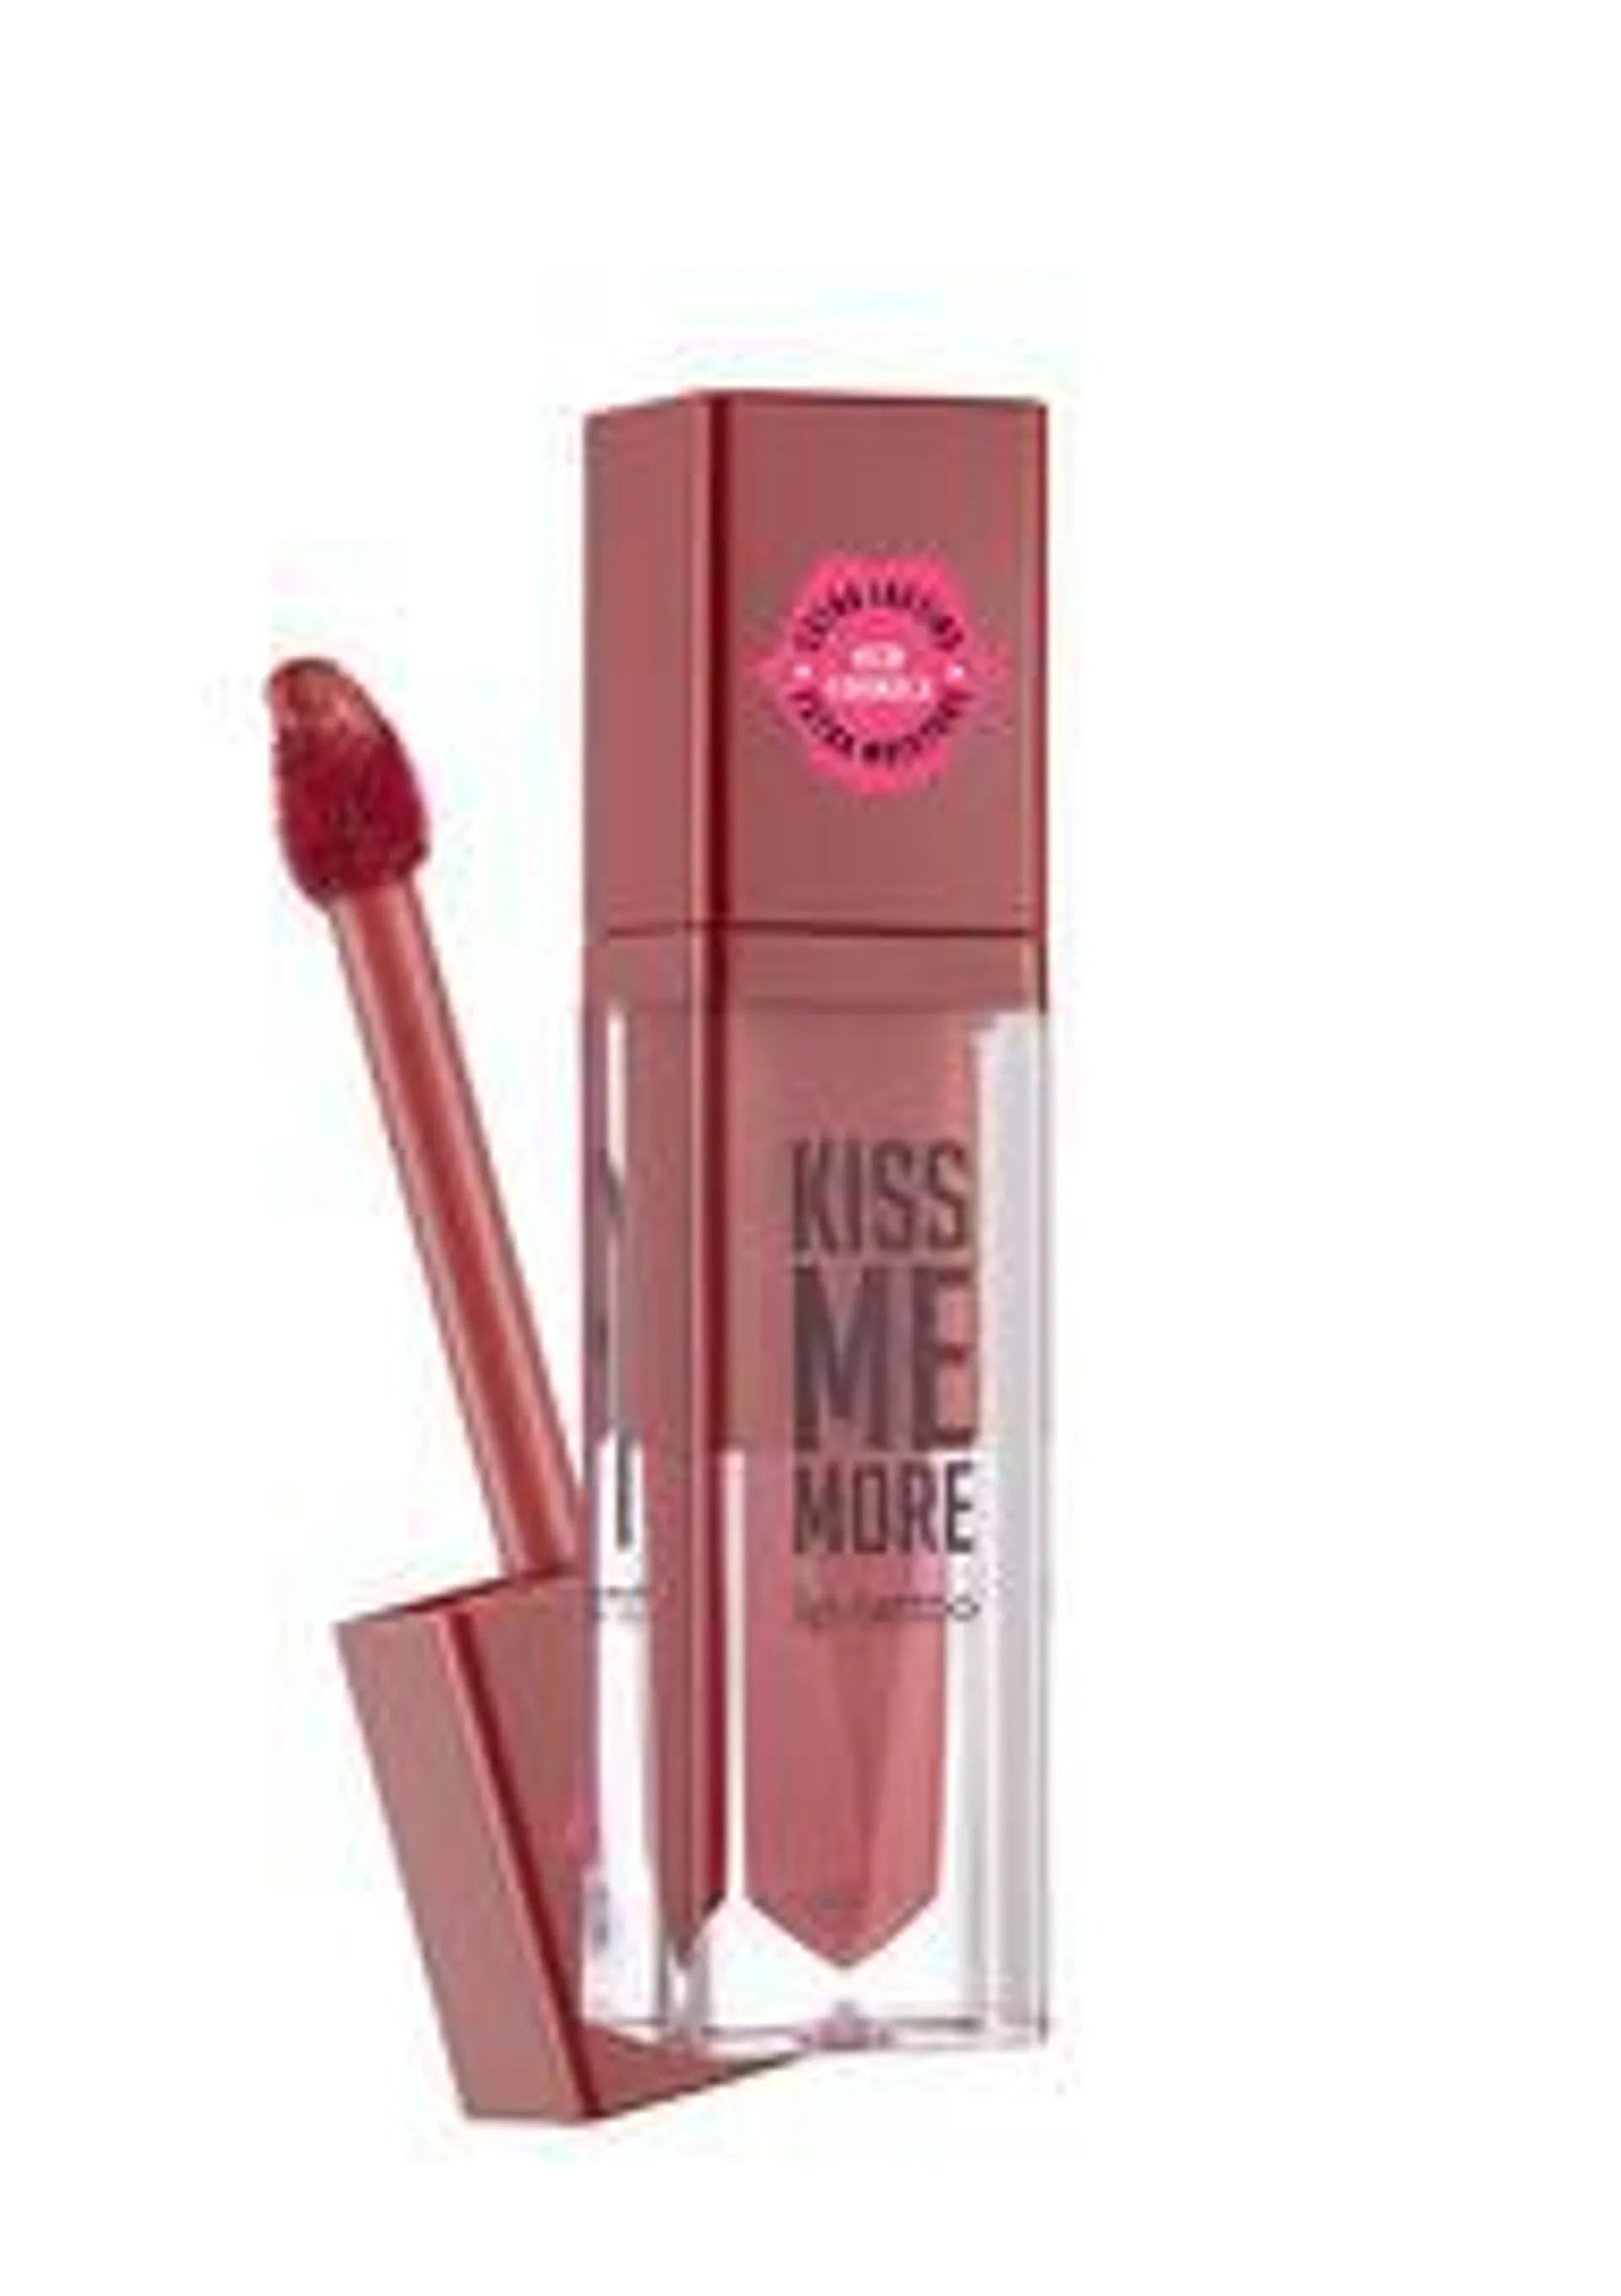 Kiss Me More Yüksek Pigmentli & Mat Bitişli Nemlendirici Likit Ruj